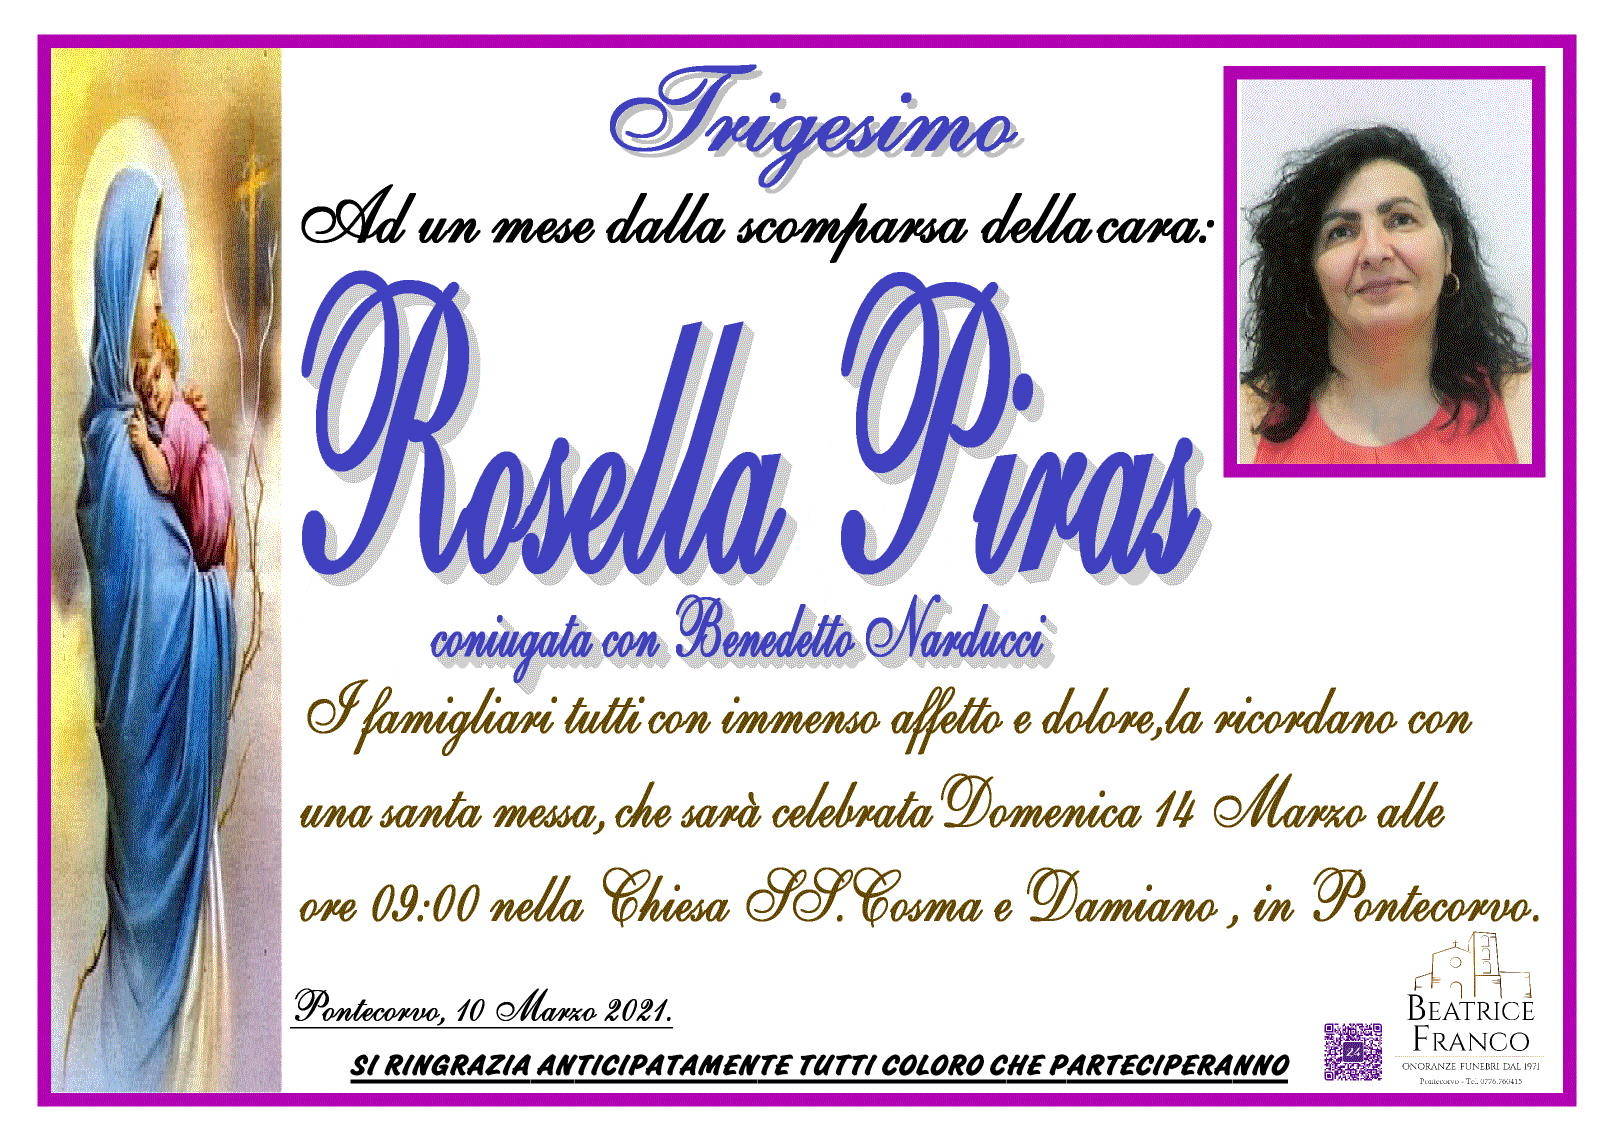 Rosella Piras